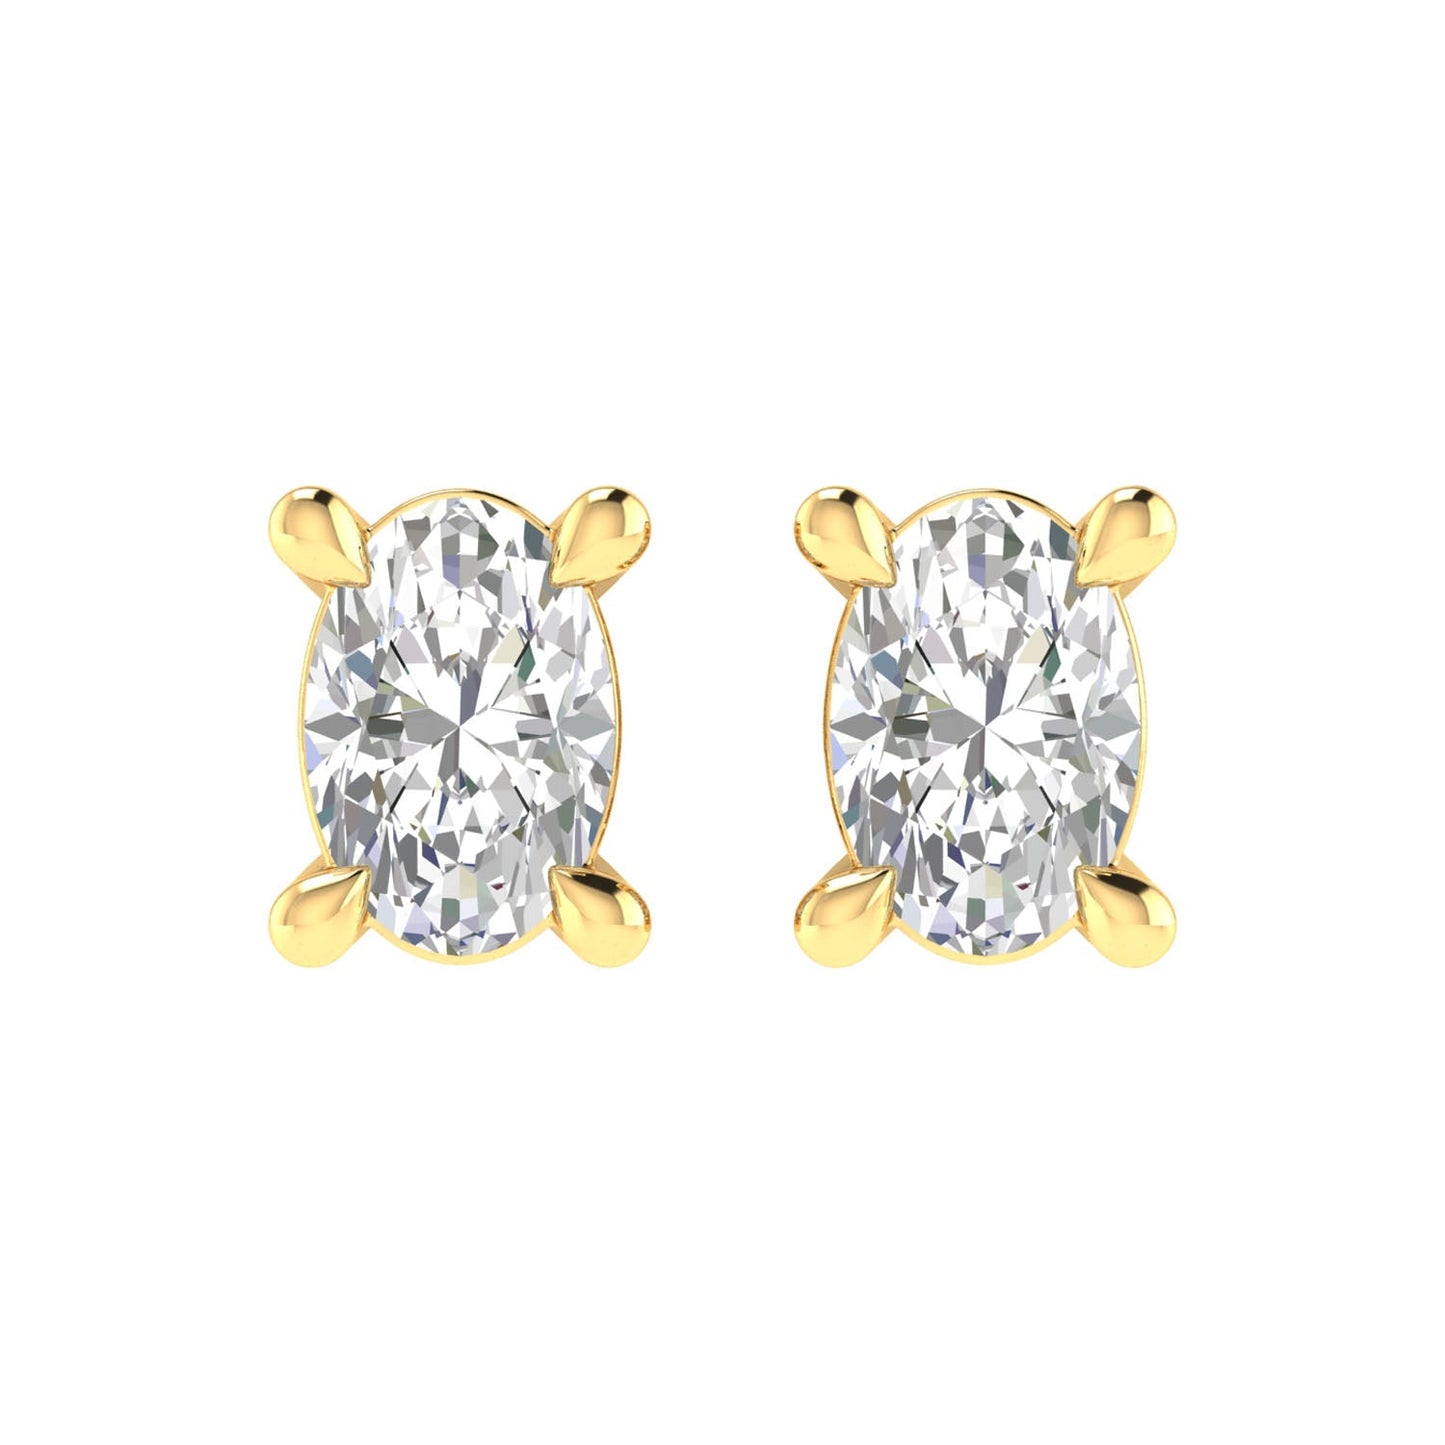 Diamond Stud Earrings with 0.25ct Diamonds in 9K Yellow Gold